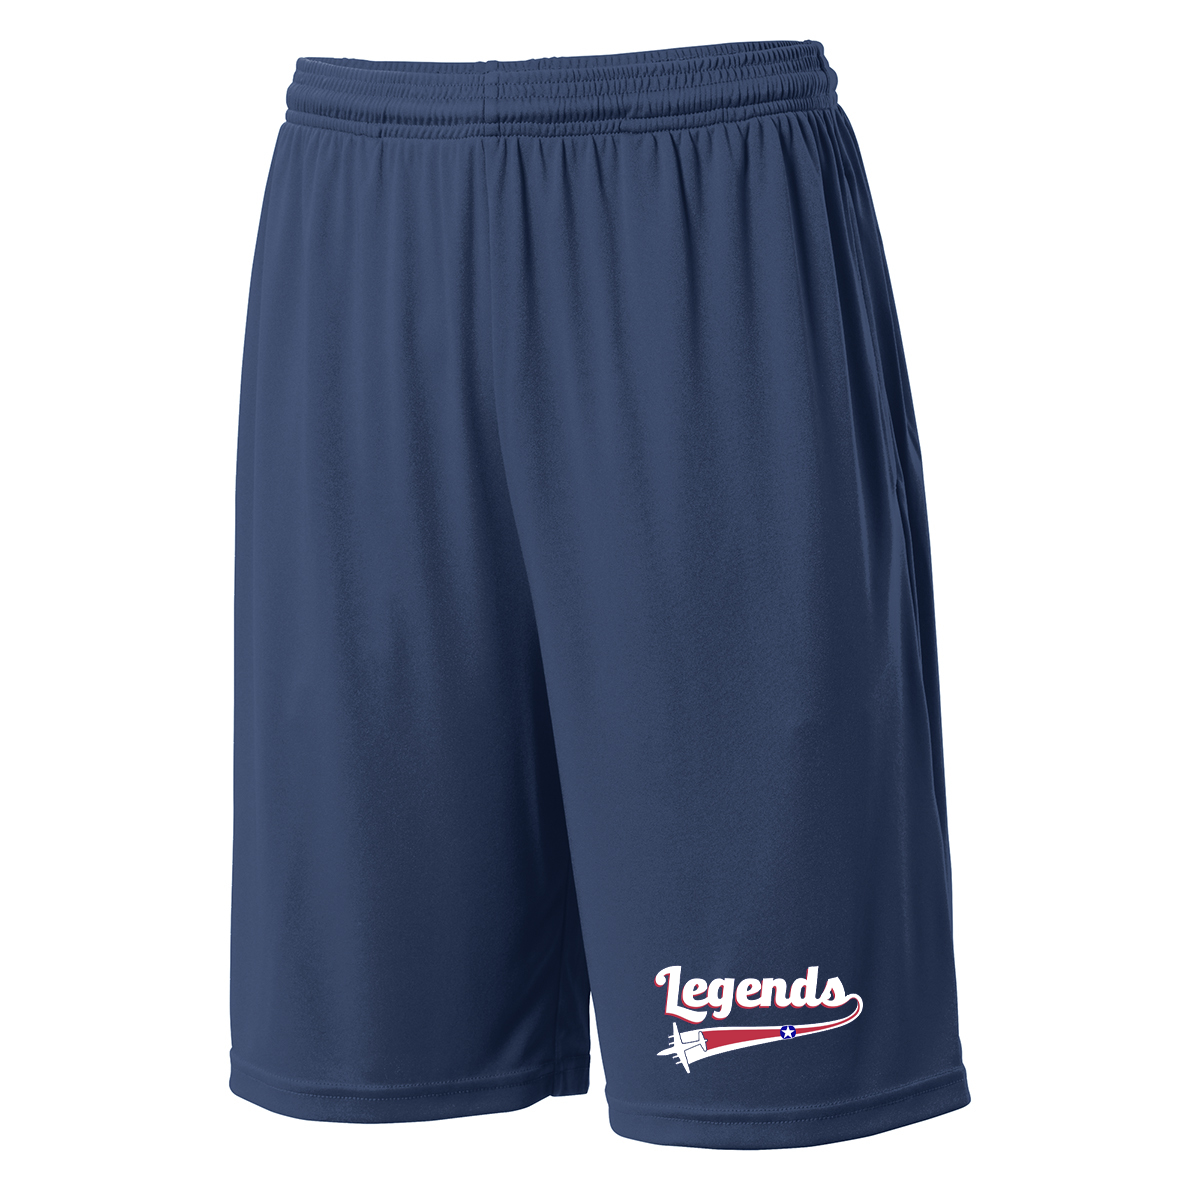 B17 Legends Baseball Shorts